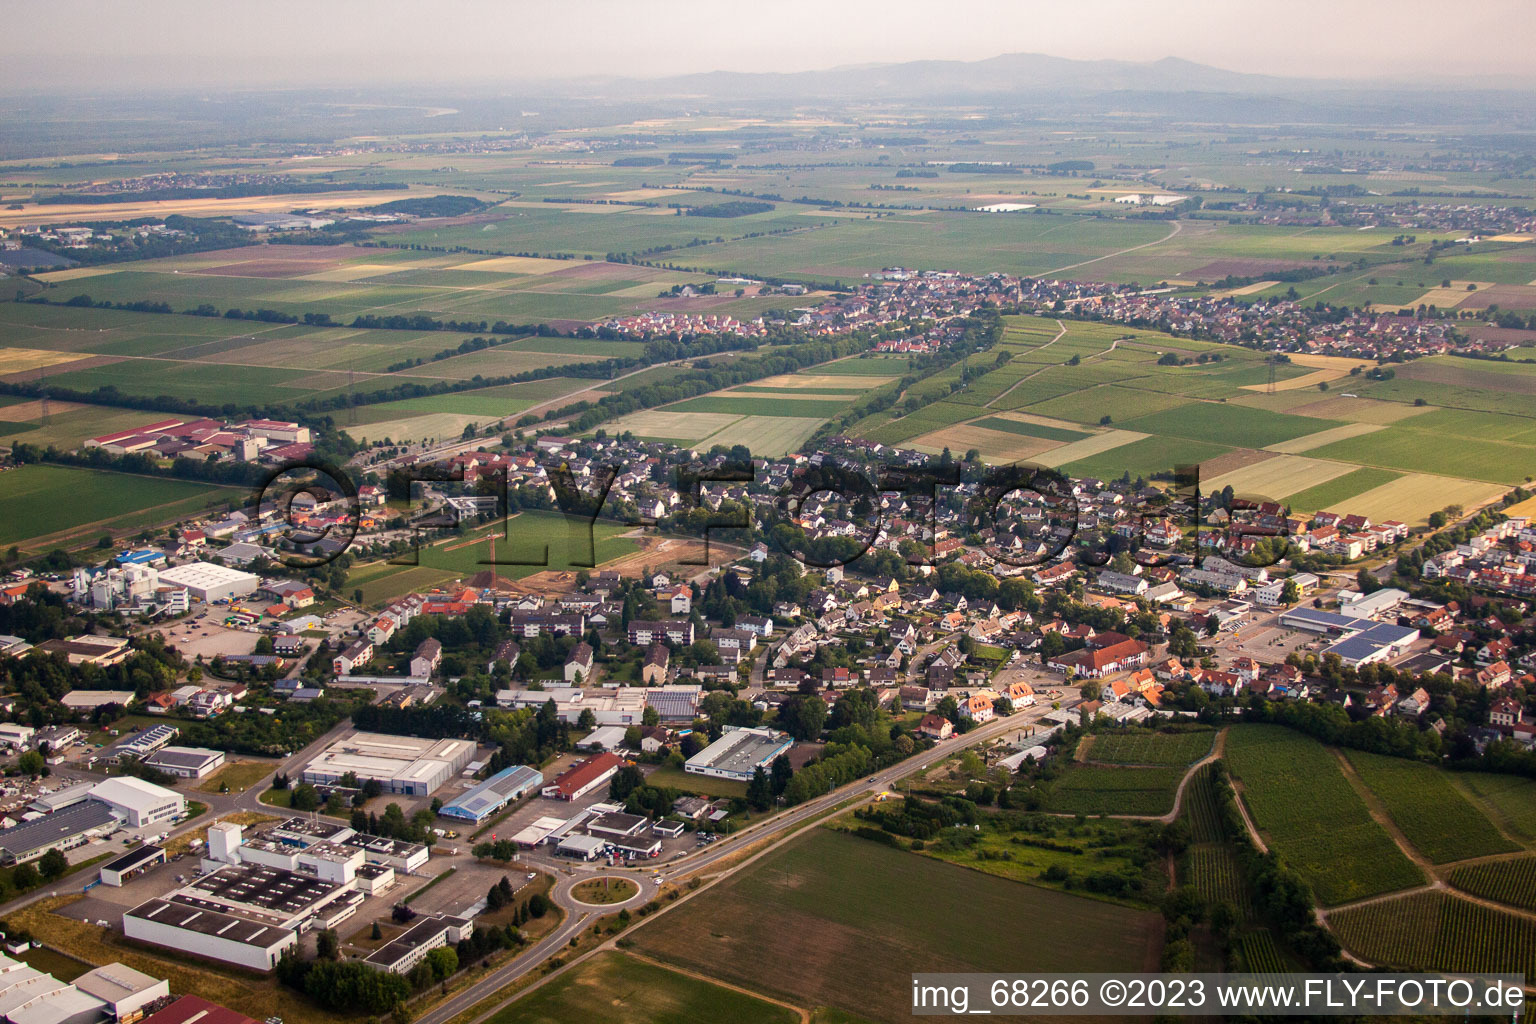 Heitersheim dans le département Bade-Wurtemberg, Allemagne vue d'en haut